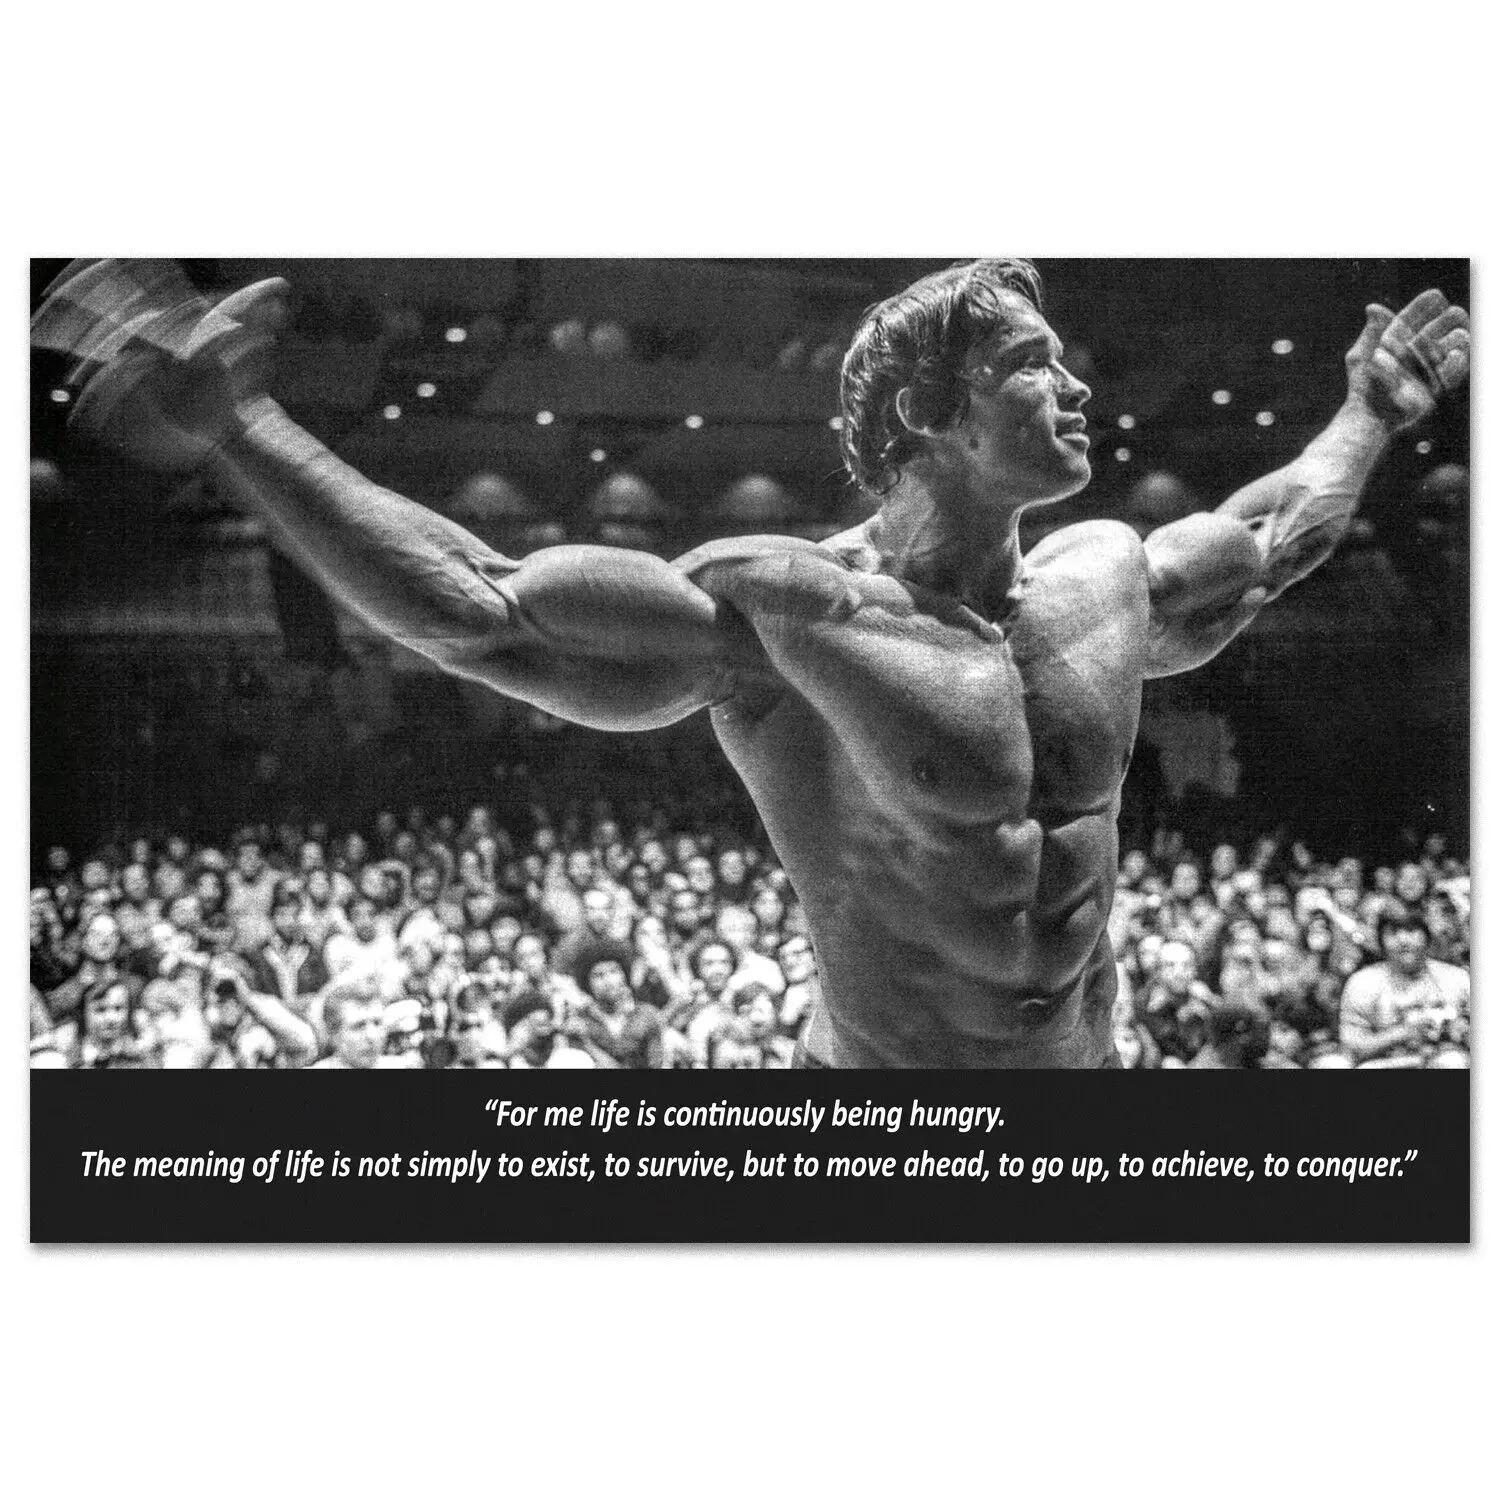 

Arnold Schwarzenegger Motivational Body Building Inspirational Quote Art Film Print Silk Poster Home Wall Decor 24x36inch